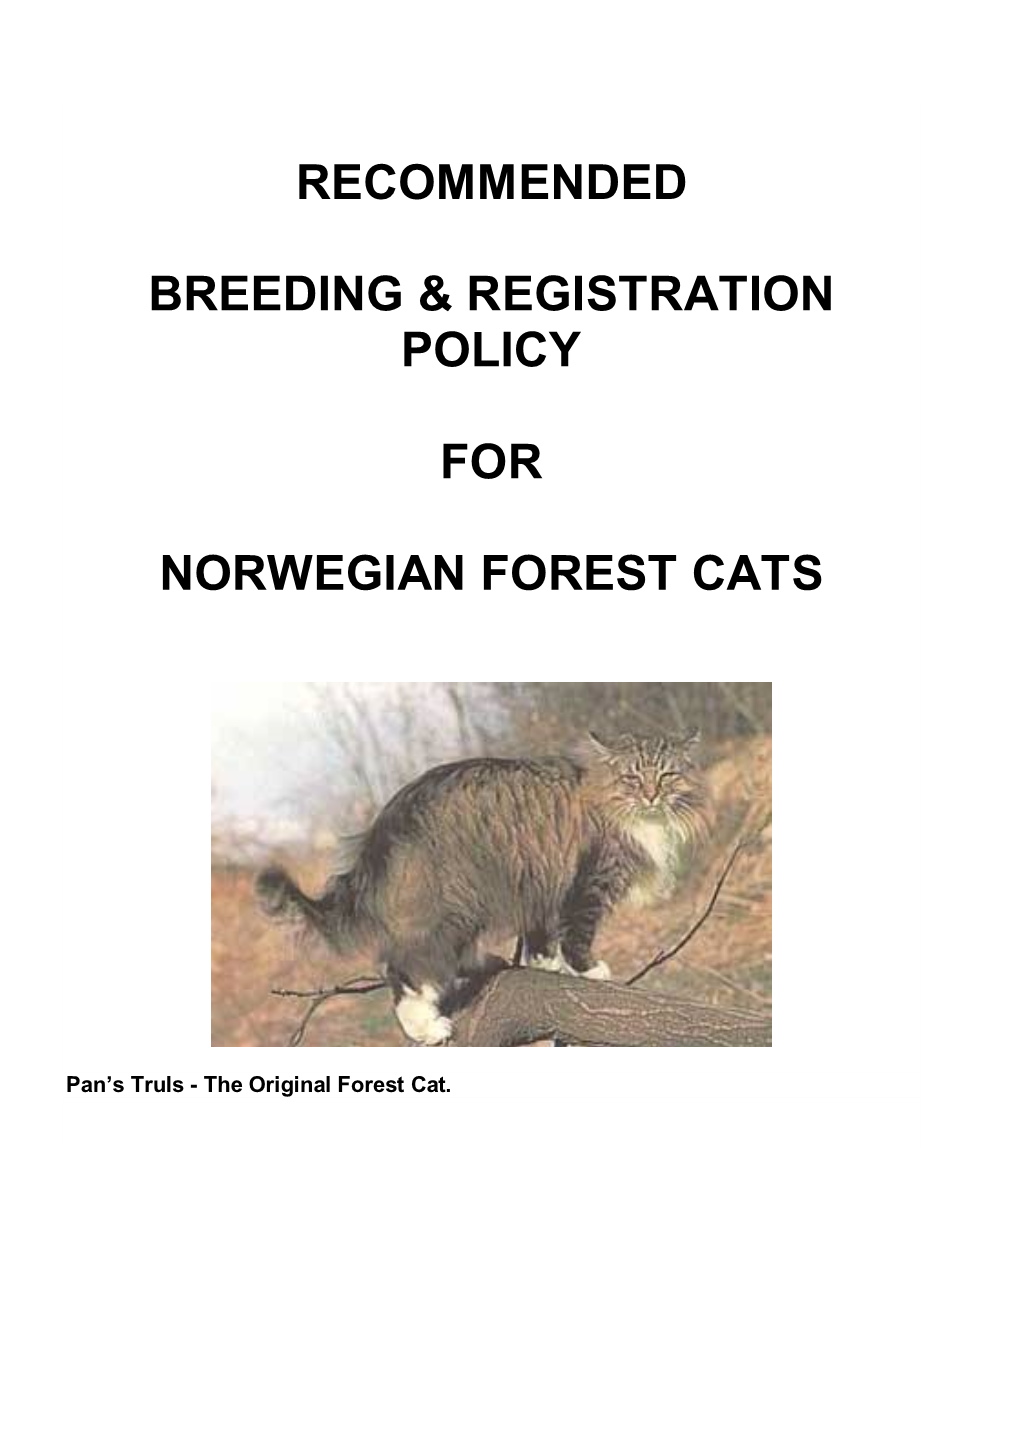 The Norwegian Forest Cat